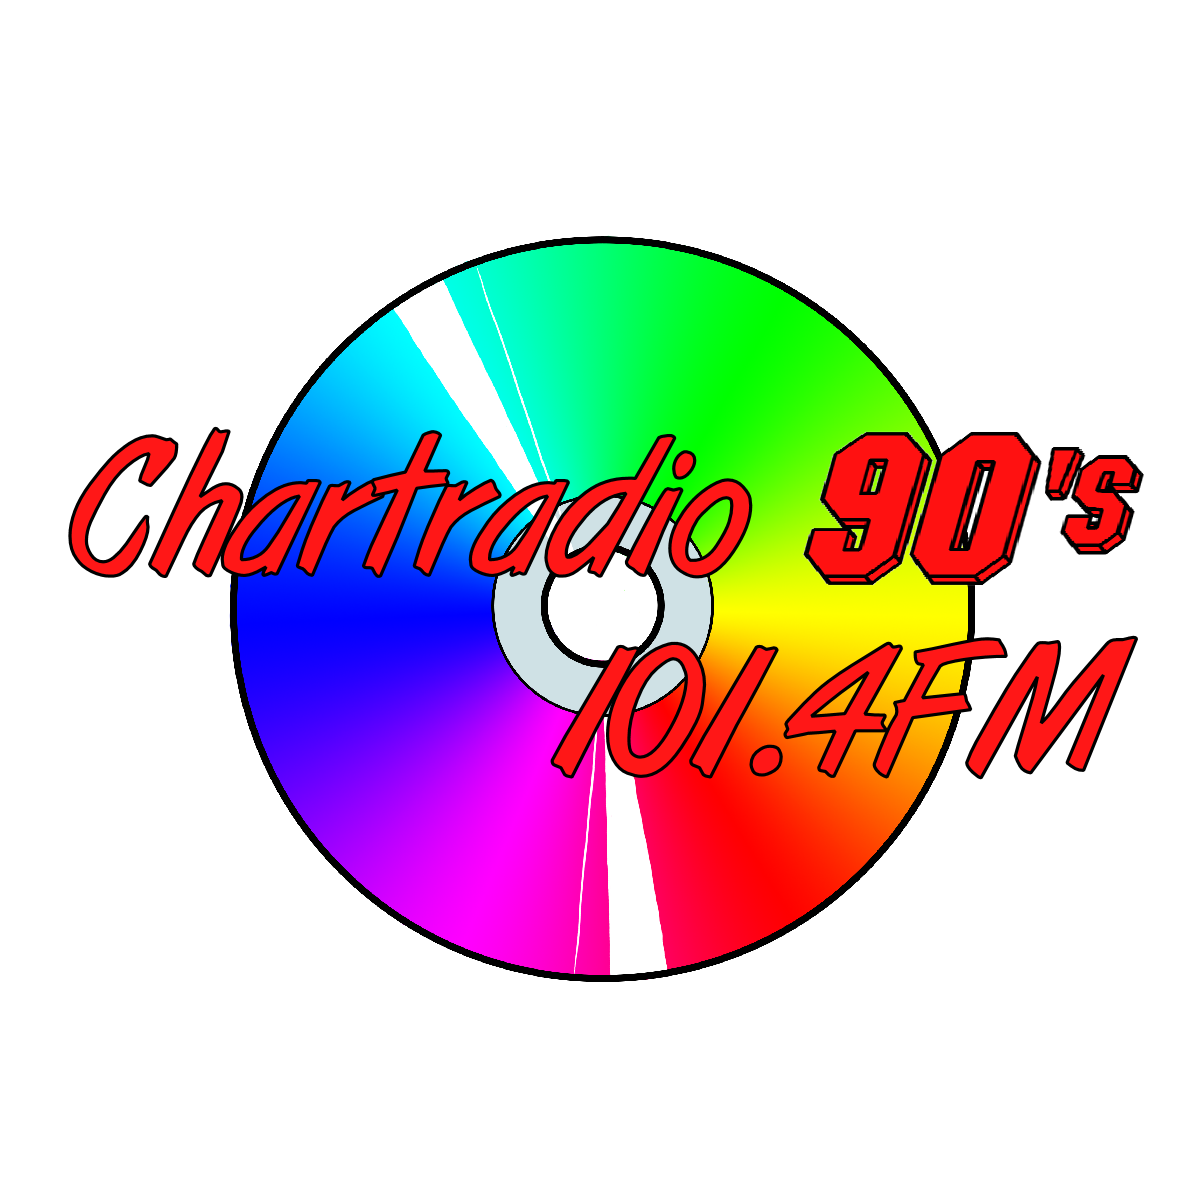 Chartradio 90s 101.4FM